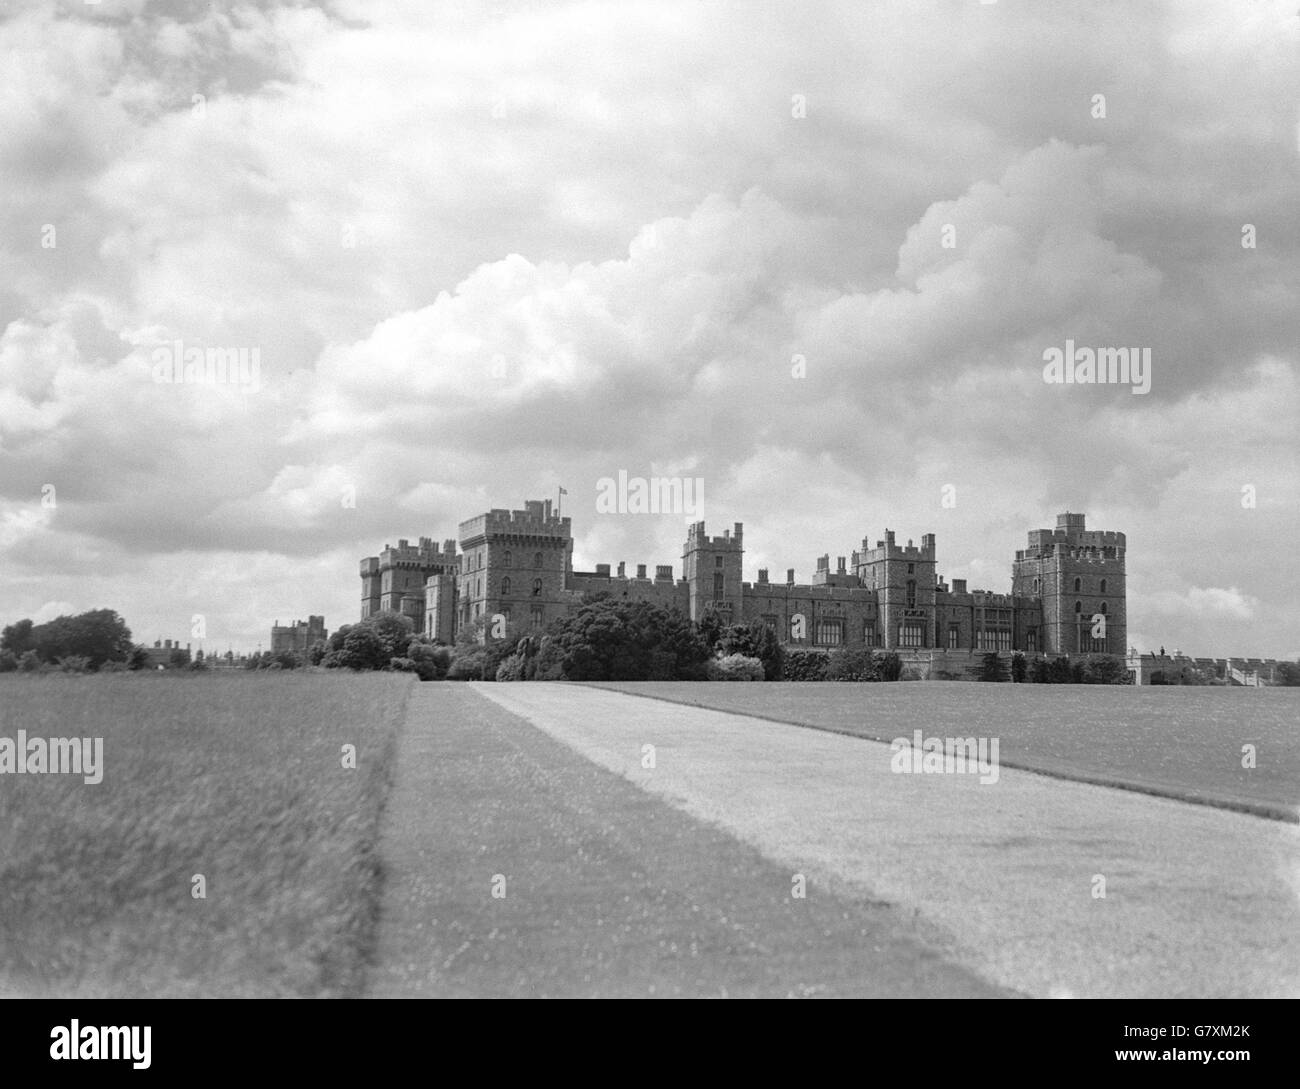 Royalty - Windsor Castle - 1939. The royal residence of Windsor Castle. Stock Photo